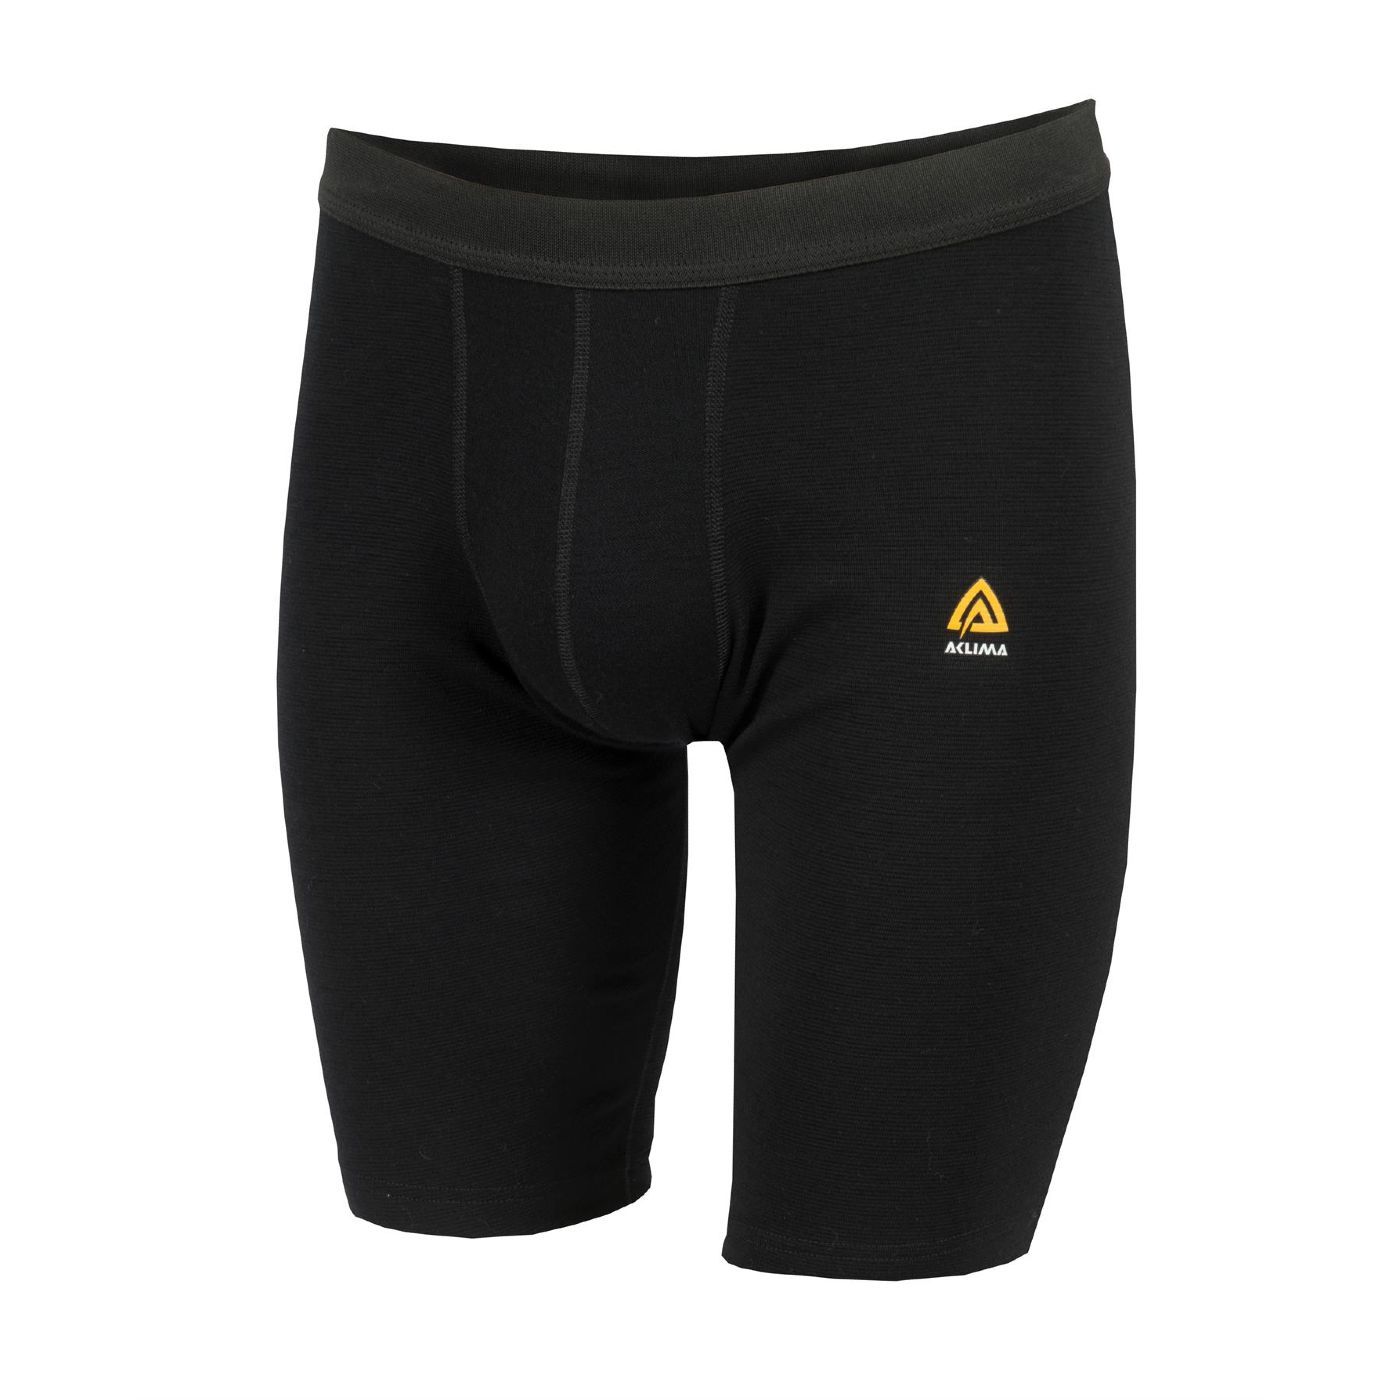 Aclima WarmWool Shorts, Men's